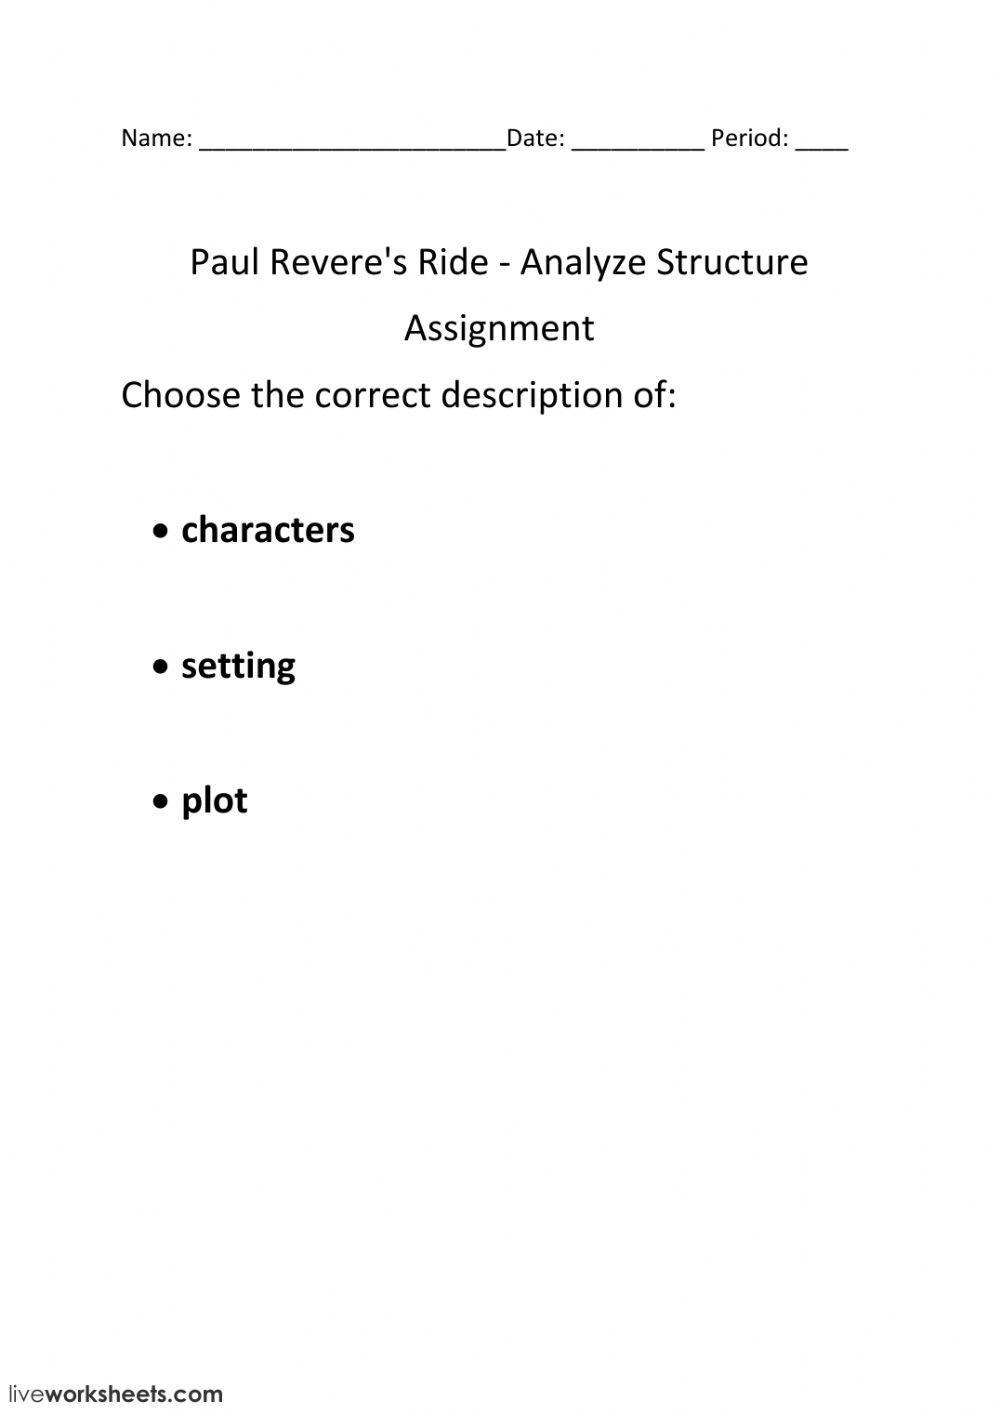 Paul Revere's Ride - Analyze Structure -2